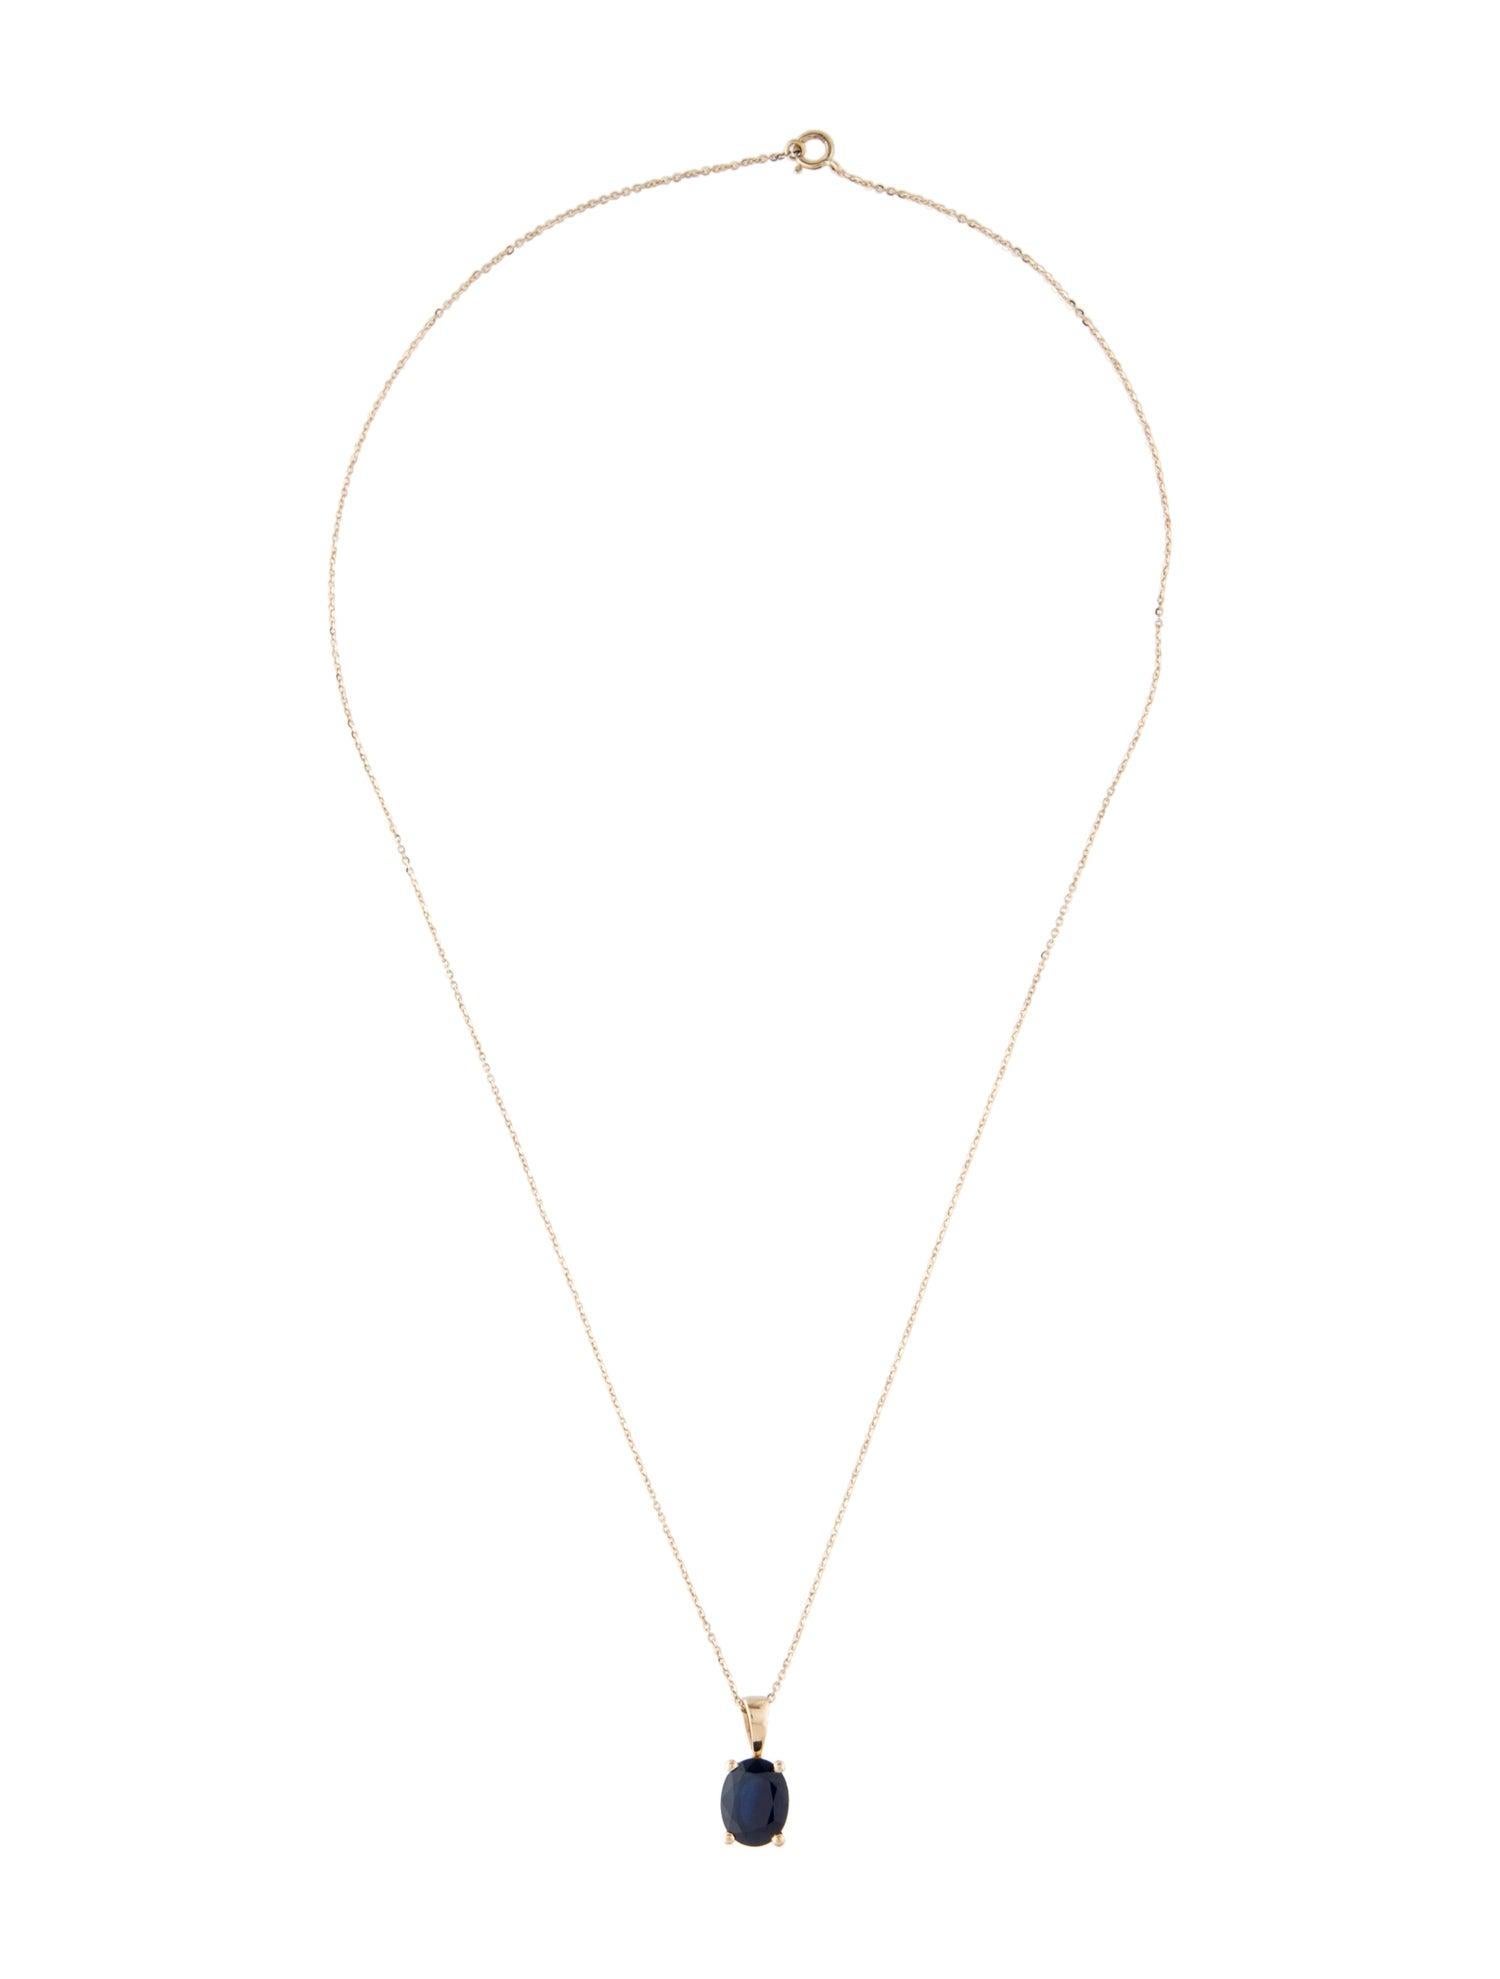 Brilliant Cut 14K 2.91ct Sapphire Pendant Necklace: Elegant Luxury Statement Piece, Timeless For Sale